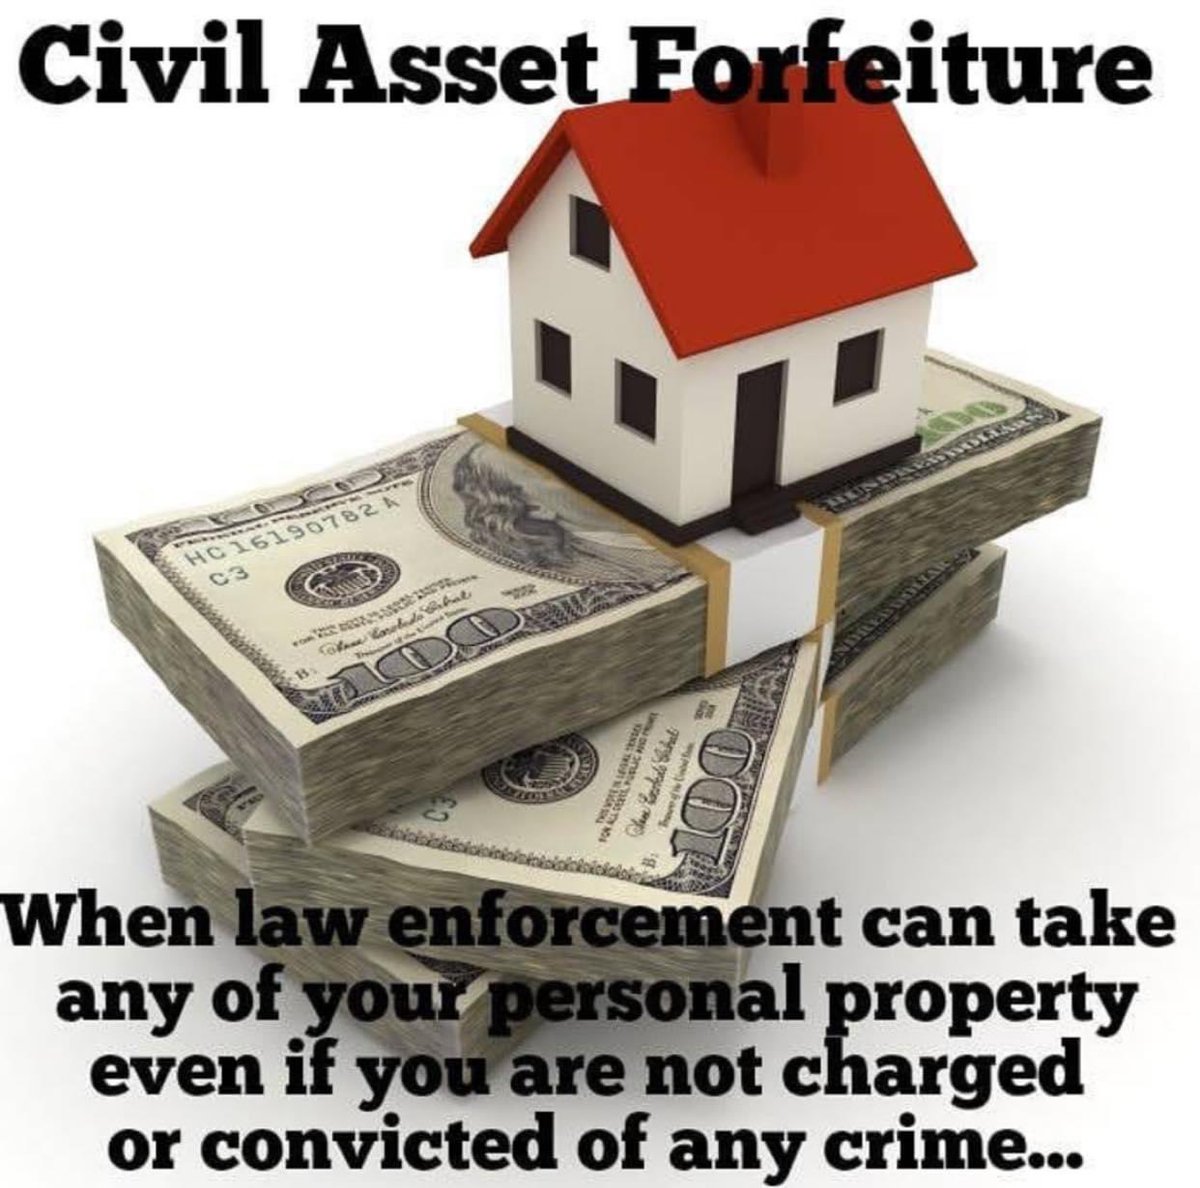 Civil Asset Forfeiture is theft.

#SharpeWay #LarrySharpe #Sharpe4Gov #Libertarian #CivilAssetForfeiture #theft #government